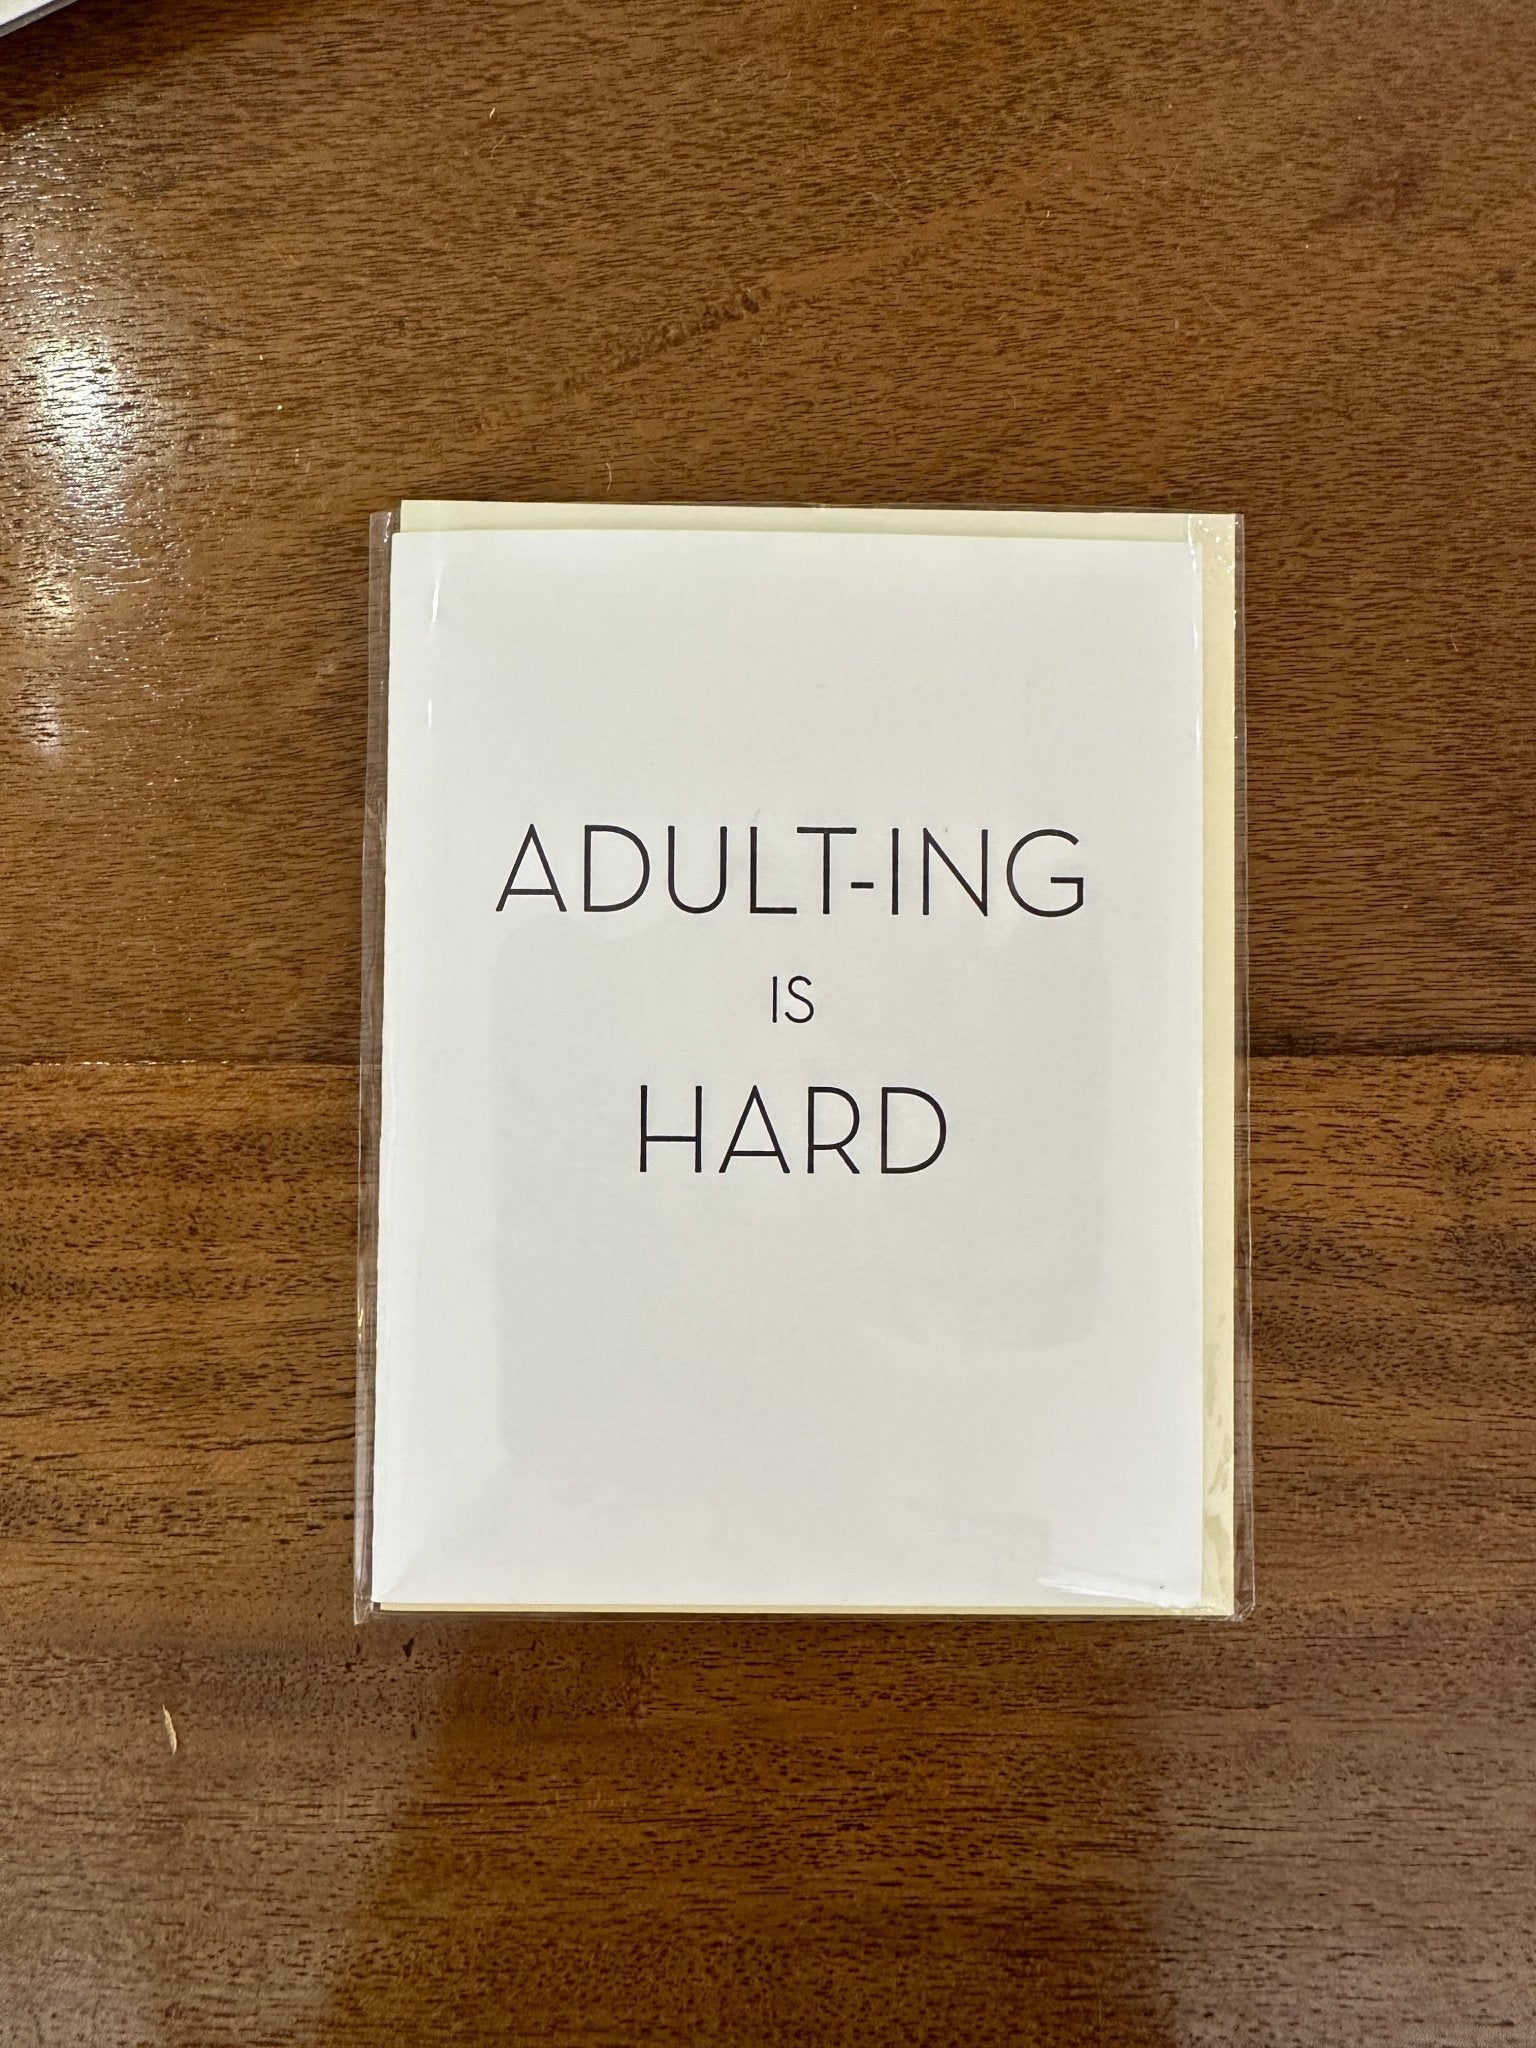 Adulting Hard Card - Joy